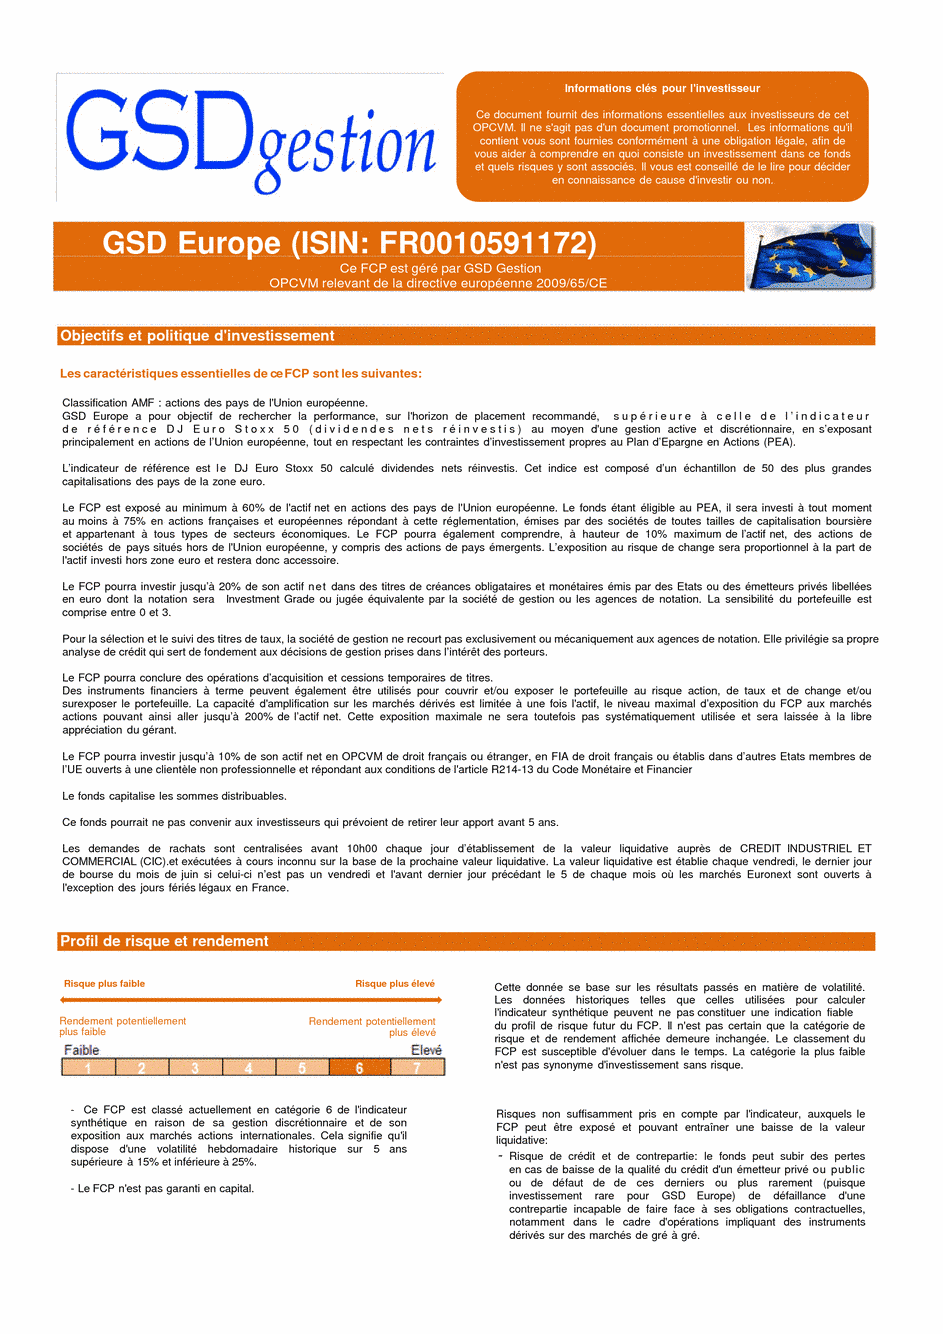 DICI-Prospectus Complet GSD Europe - 06/09/2016 - Français